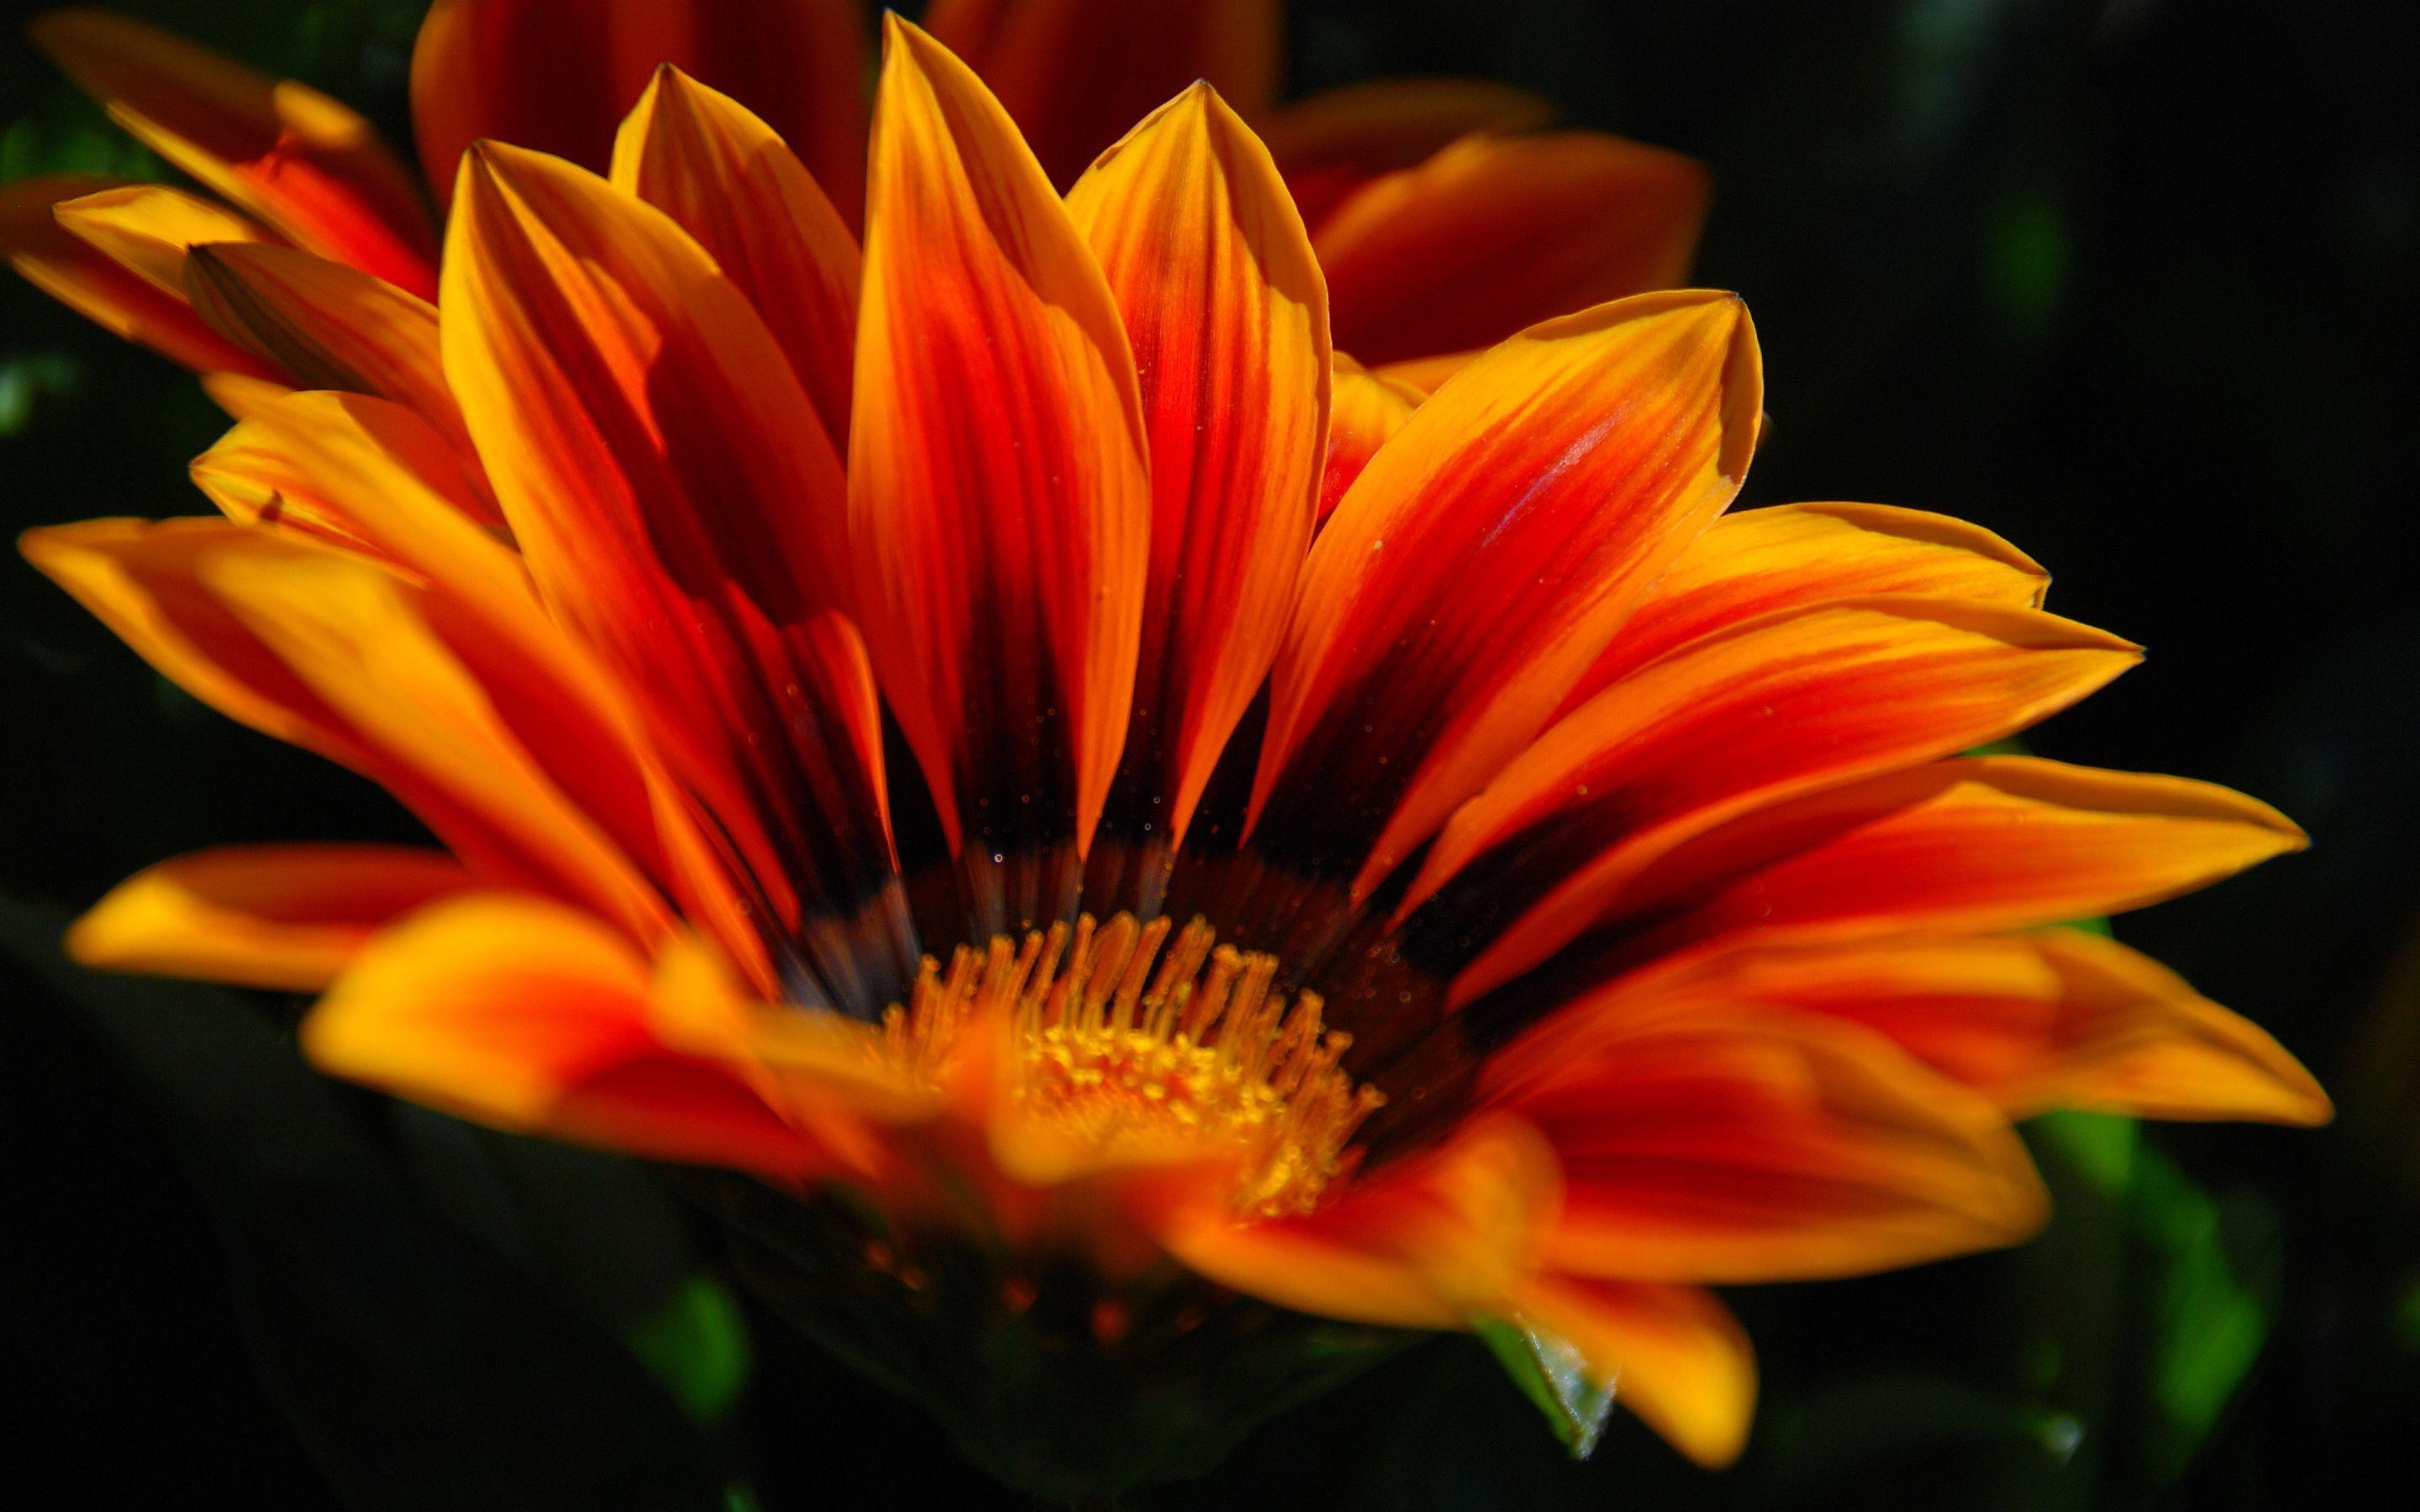 HD wallpaper download. Orange flower HD Wallpaper Picture Photo